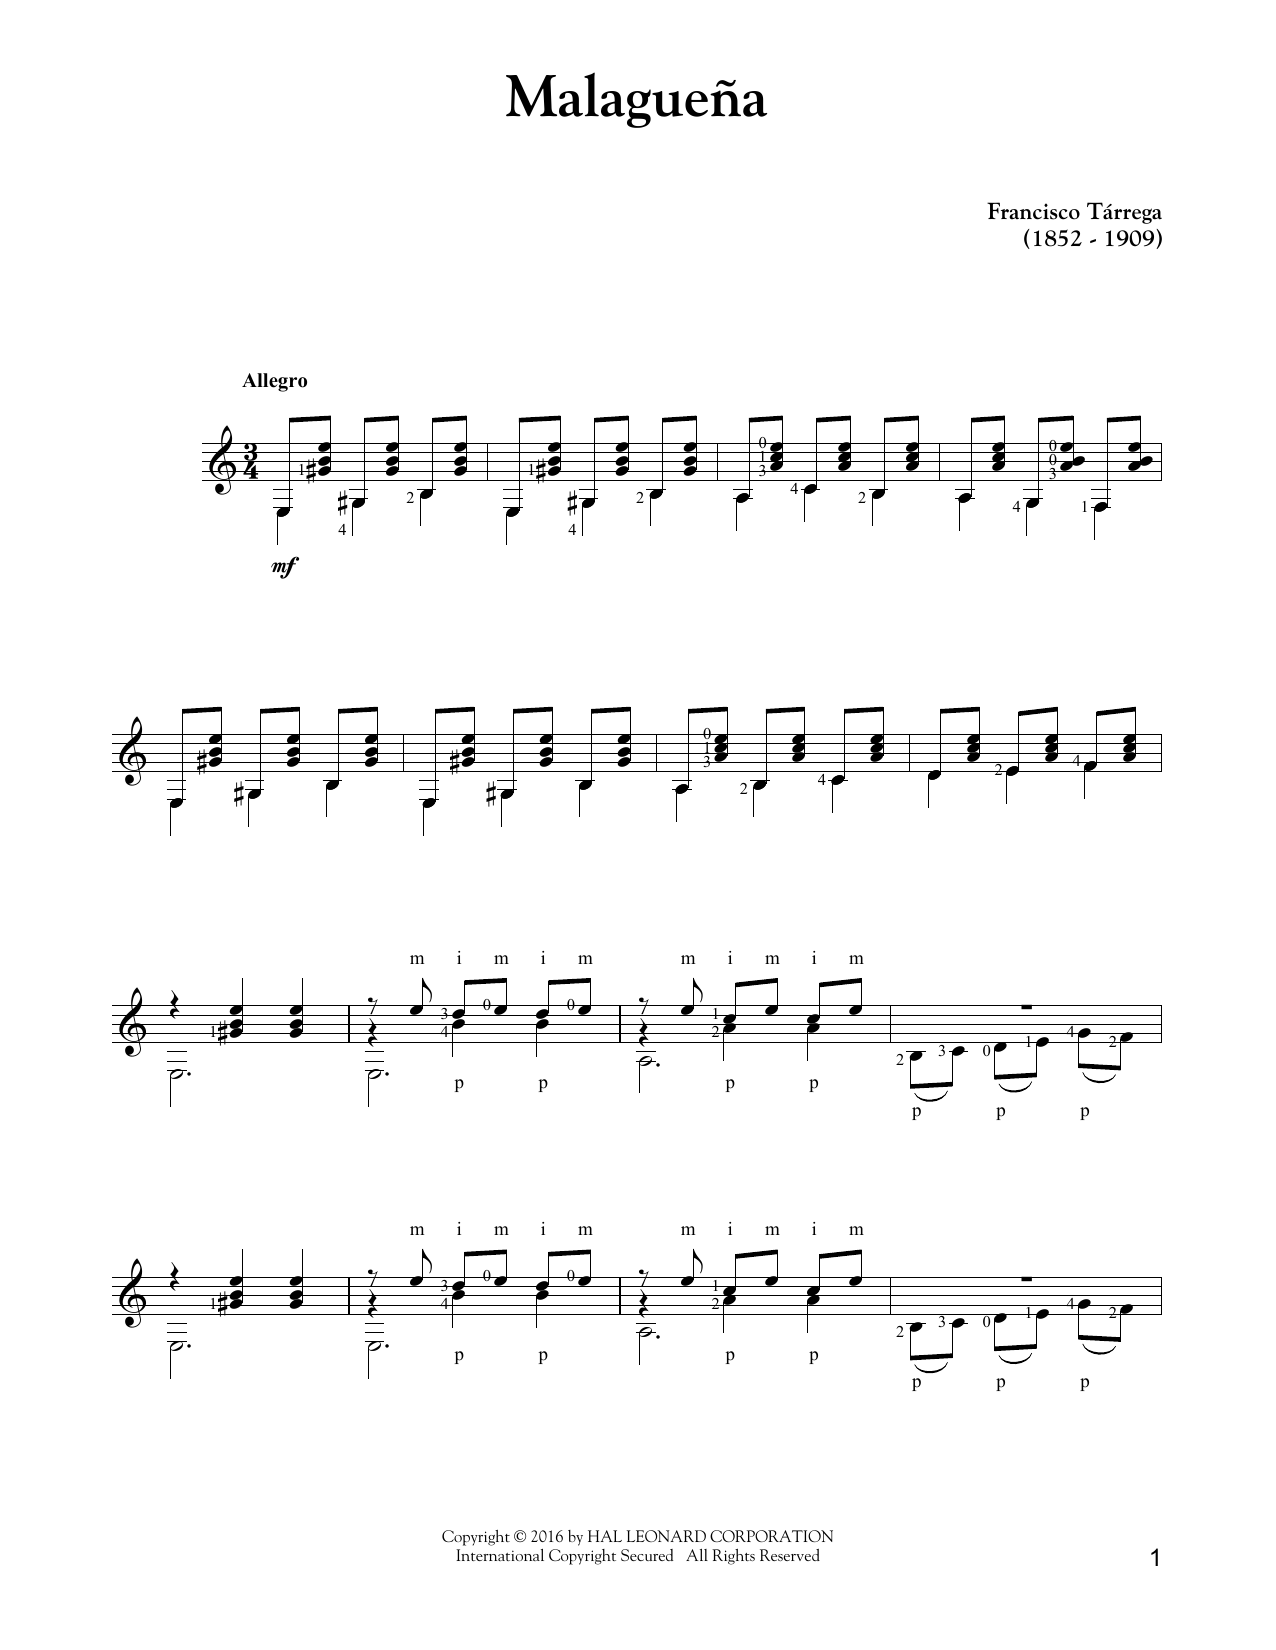 Download Francisco Tarrega Malagueña Sheet Music and learn how to play Guitar Tab PDF digital score in minutes